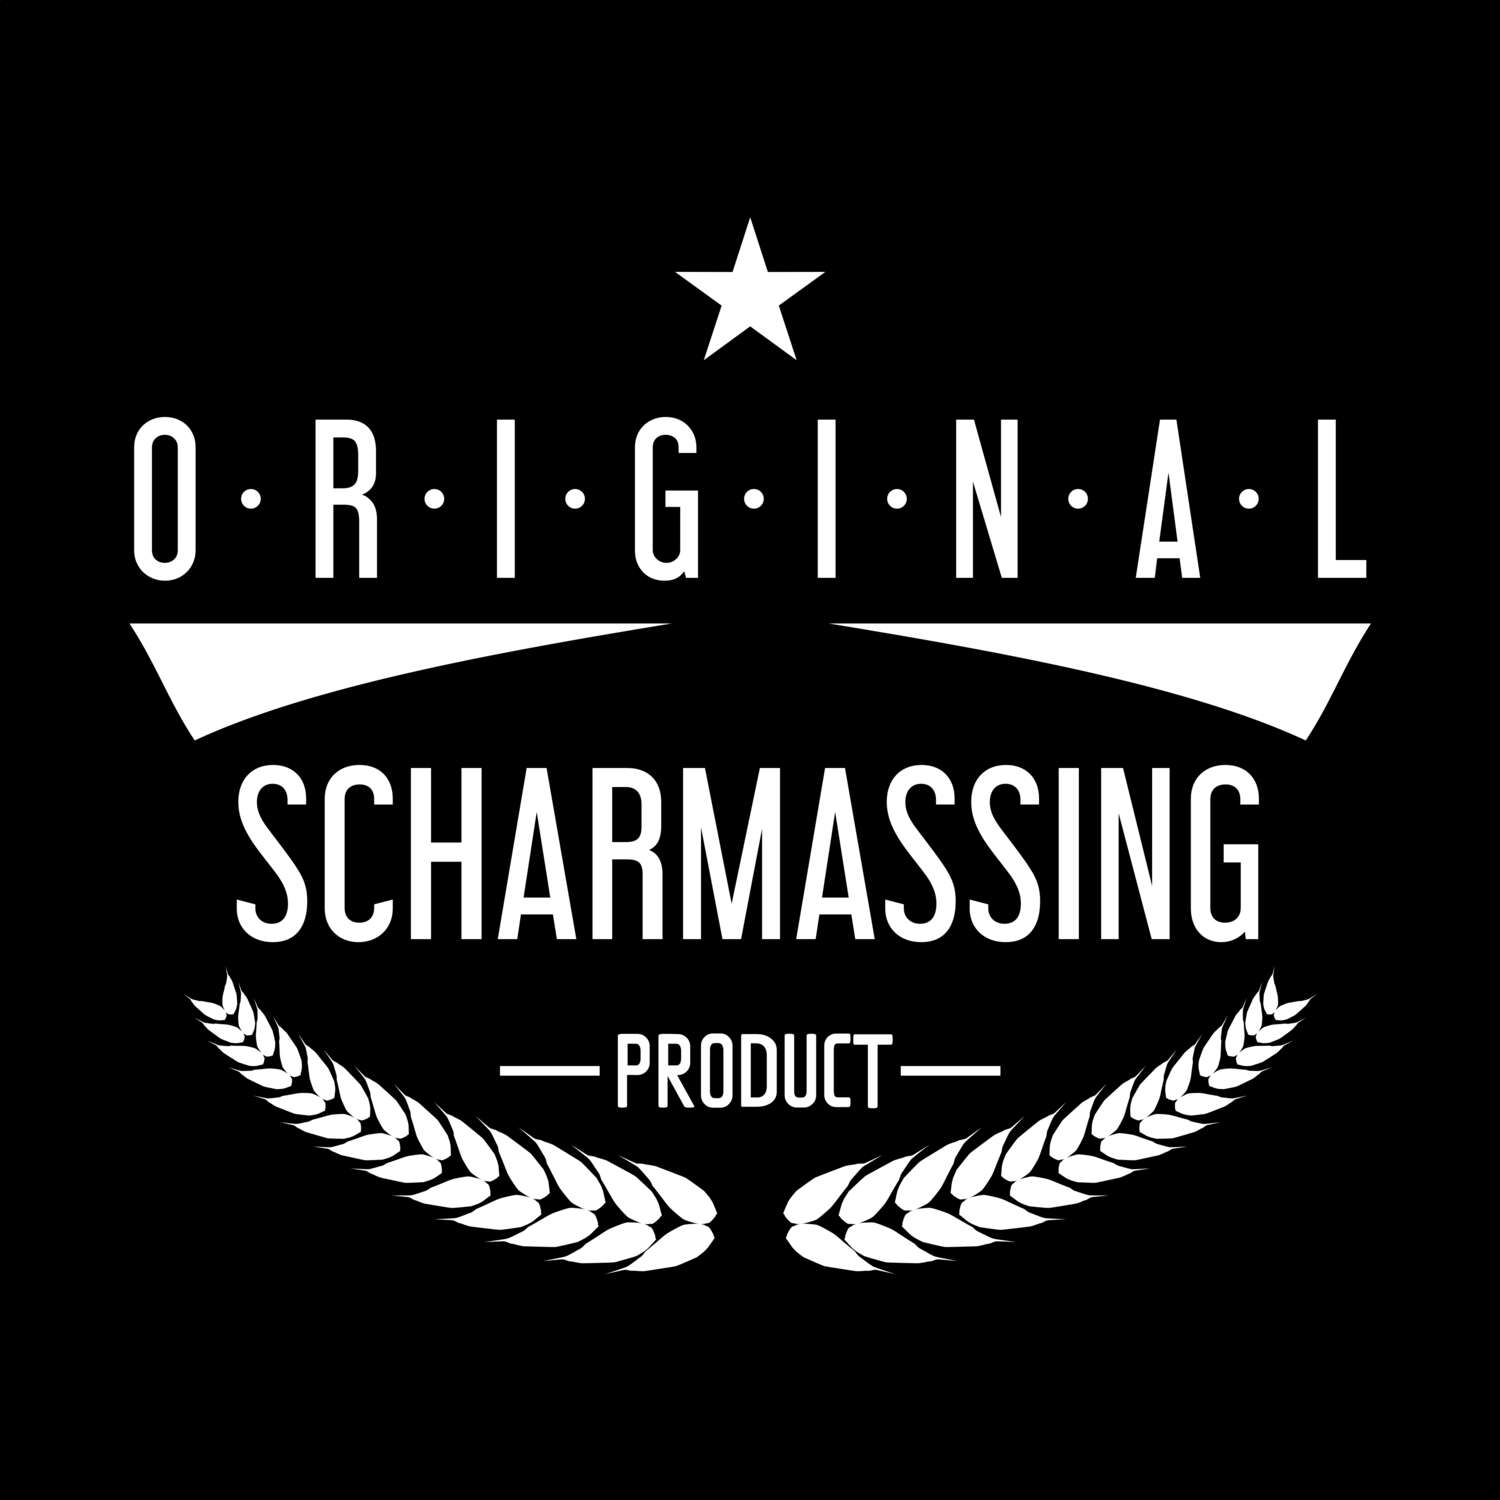 Scharmassing T-Shirt »Original Product«